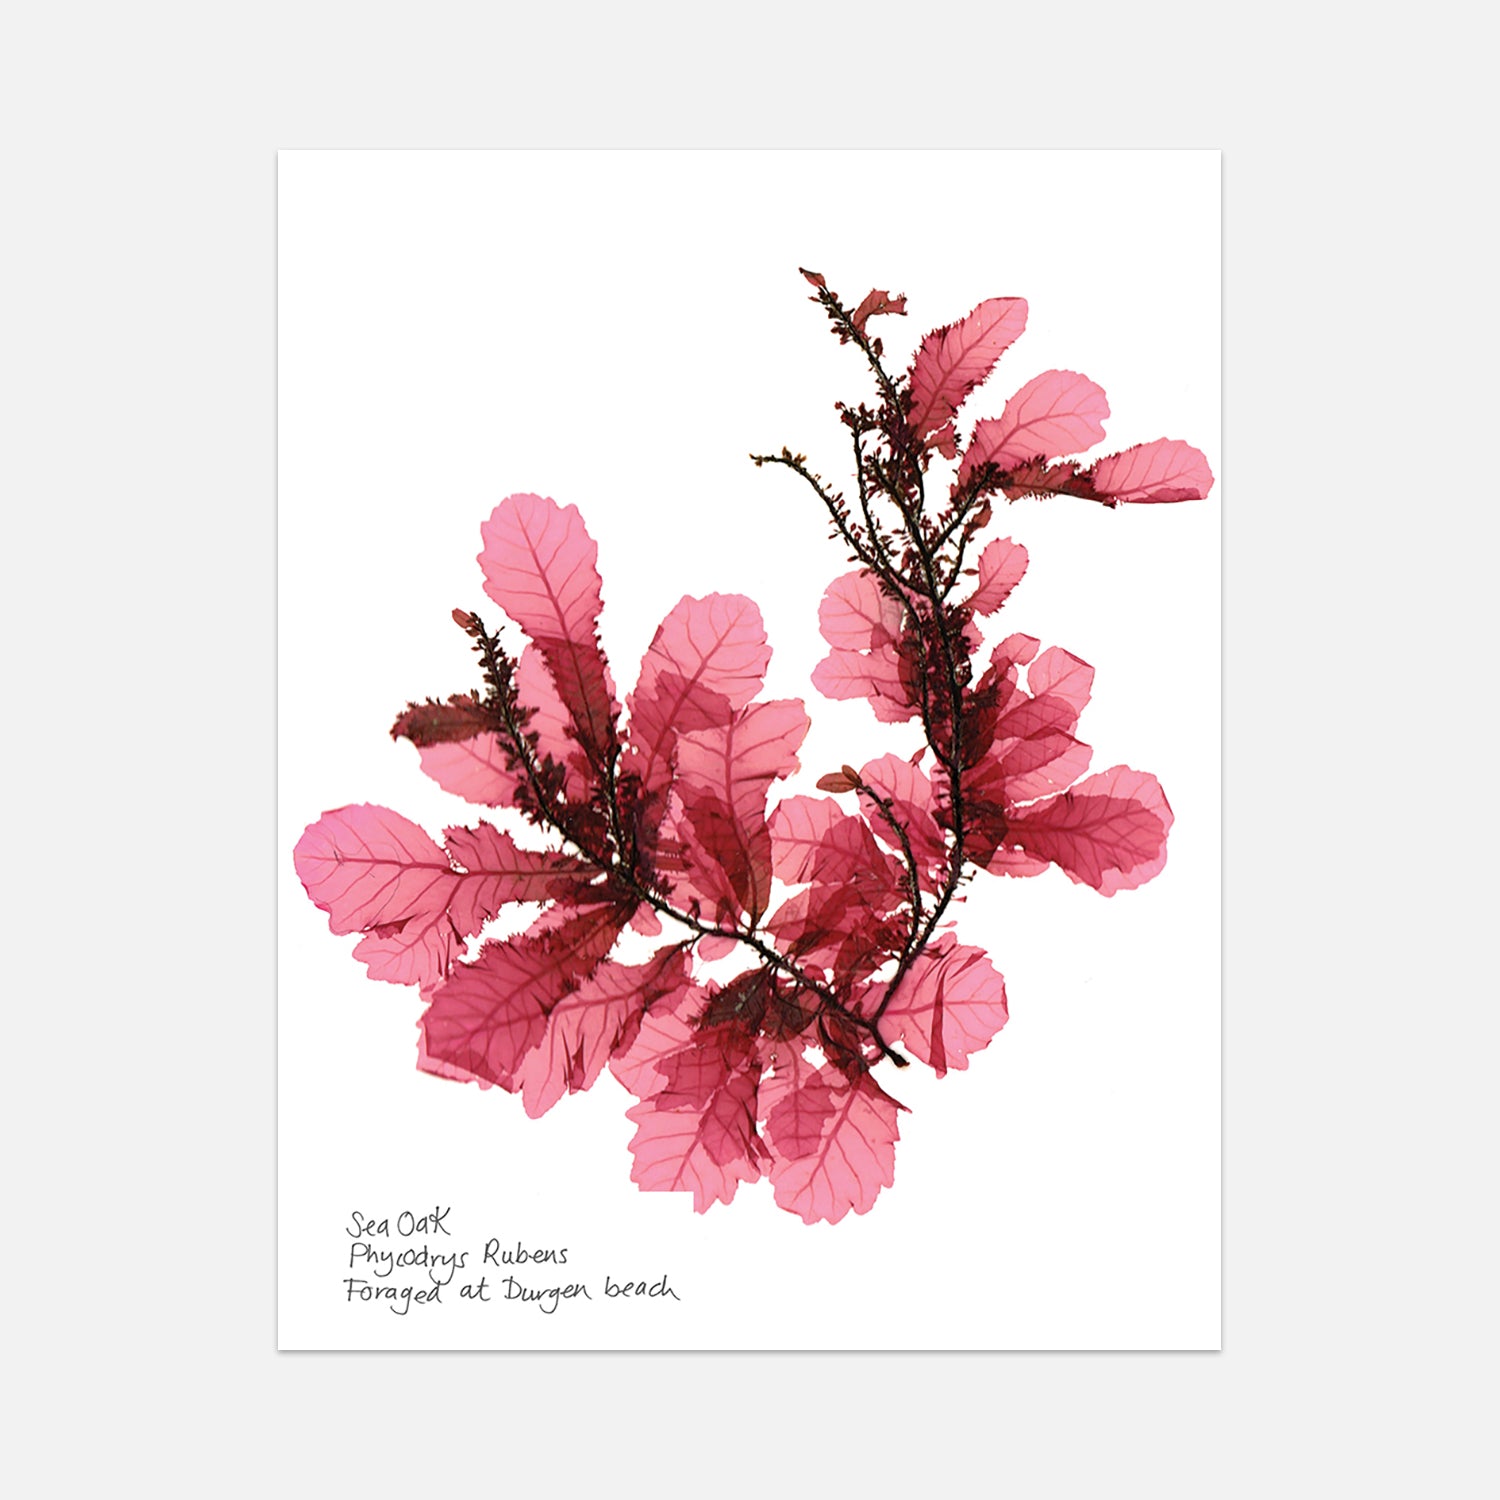 image of sea oak seaweed with think oak shaped pink leaves